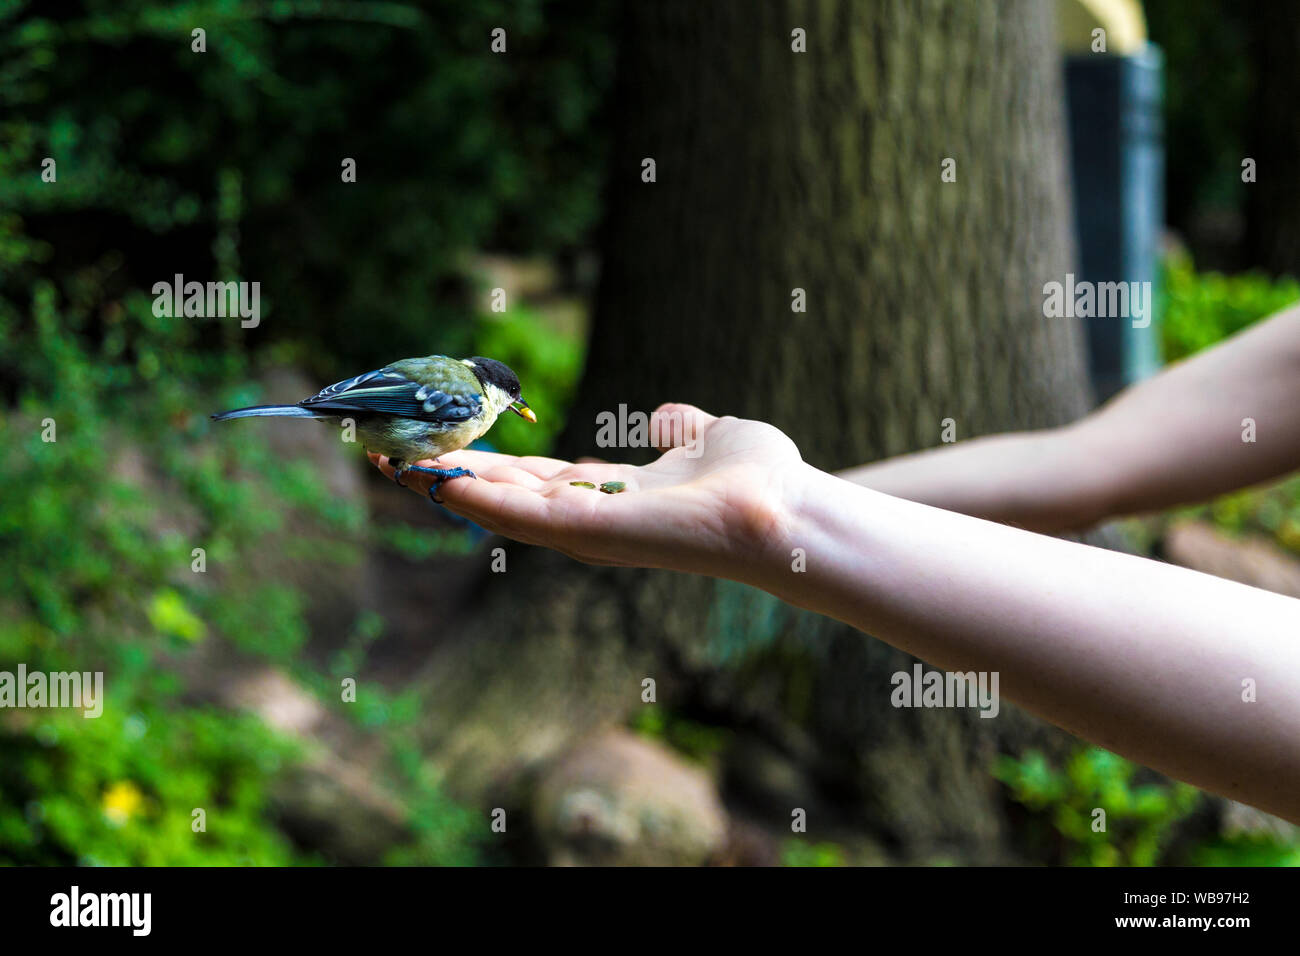 Feeding birds at Lazienki Krolewskie, bird sitting on palm picking up a seed (Royals Baths Park), Warsaw, Poland Stock Photo